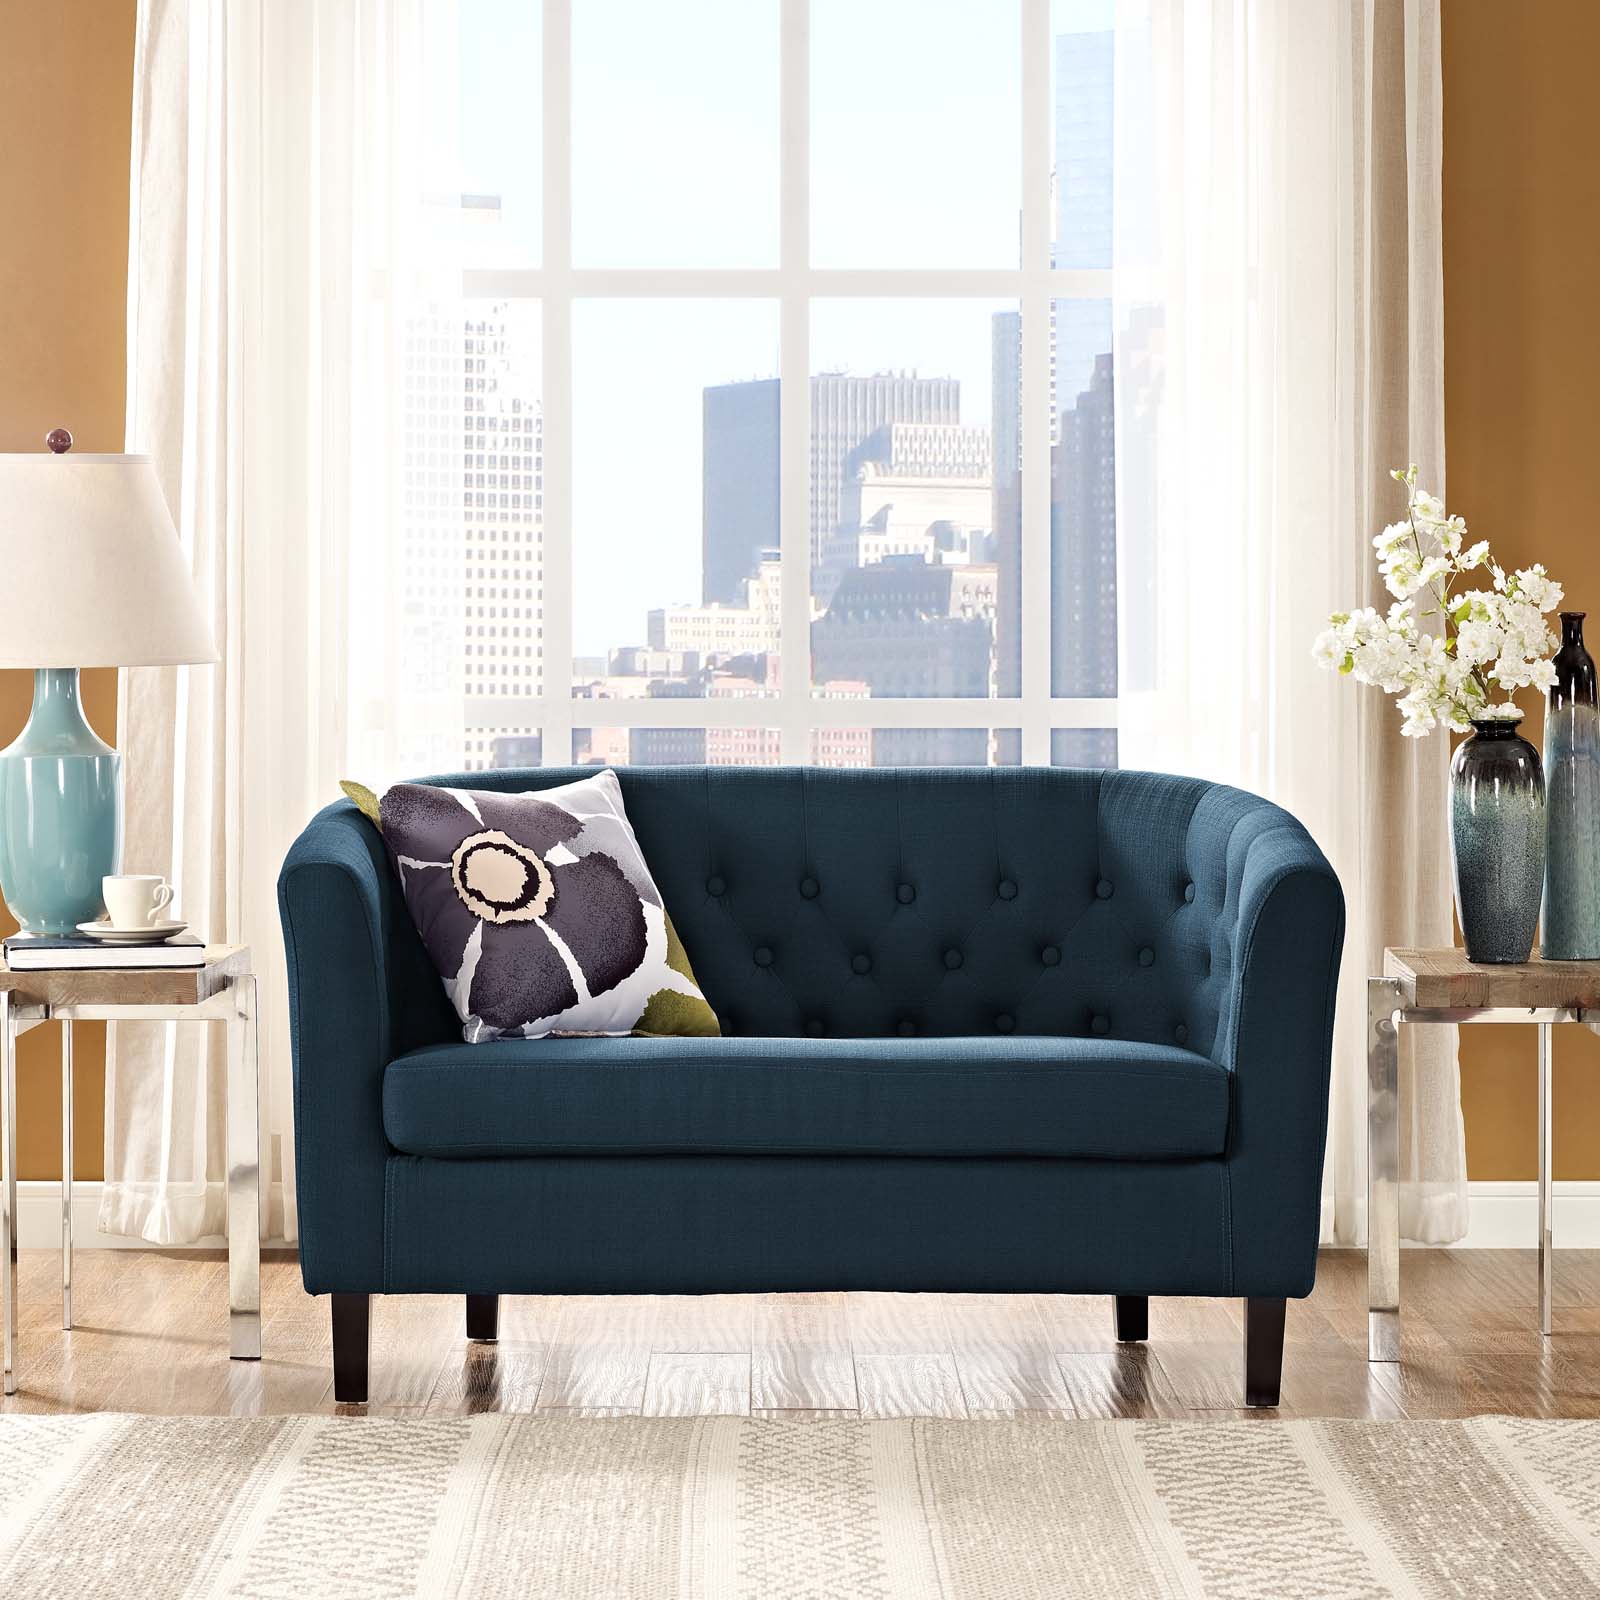 Modway Loveseats - Prospect Upholstered Fabric Loveseat Azure